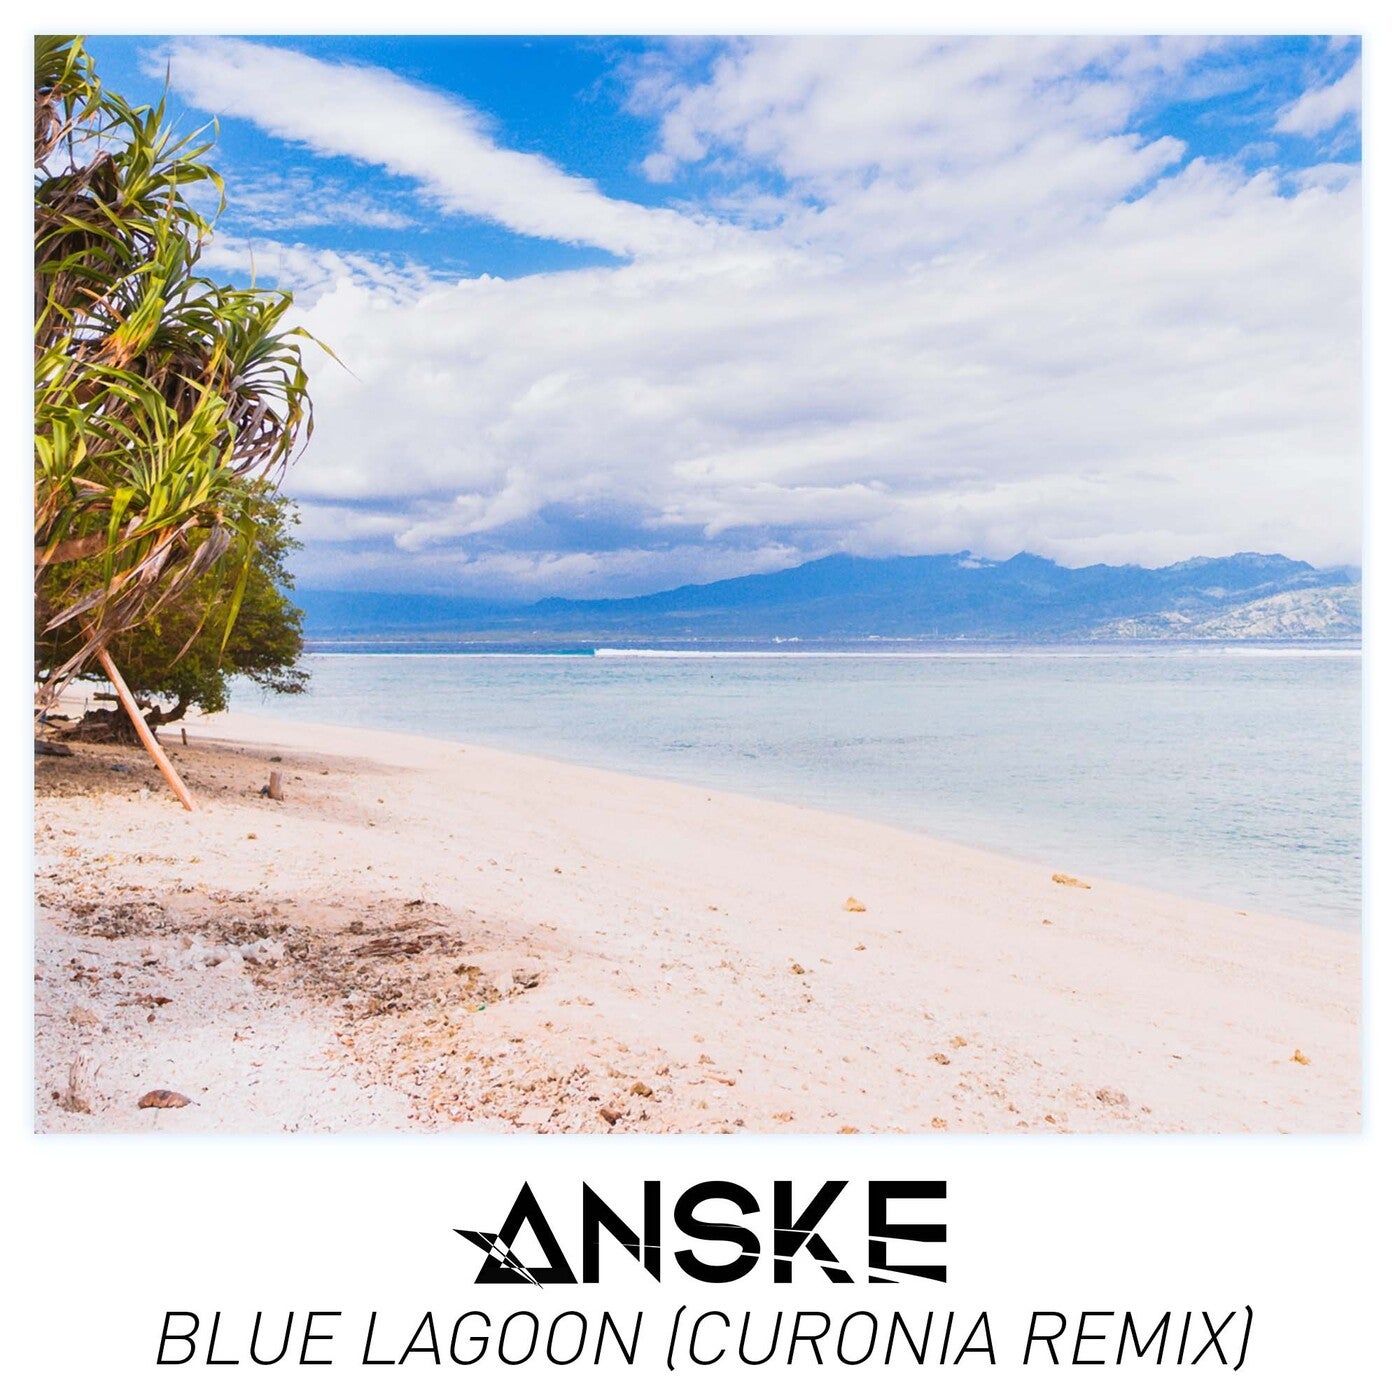 Blue Lagoon - Curonia Remix